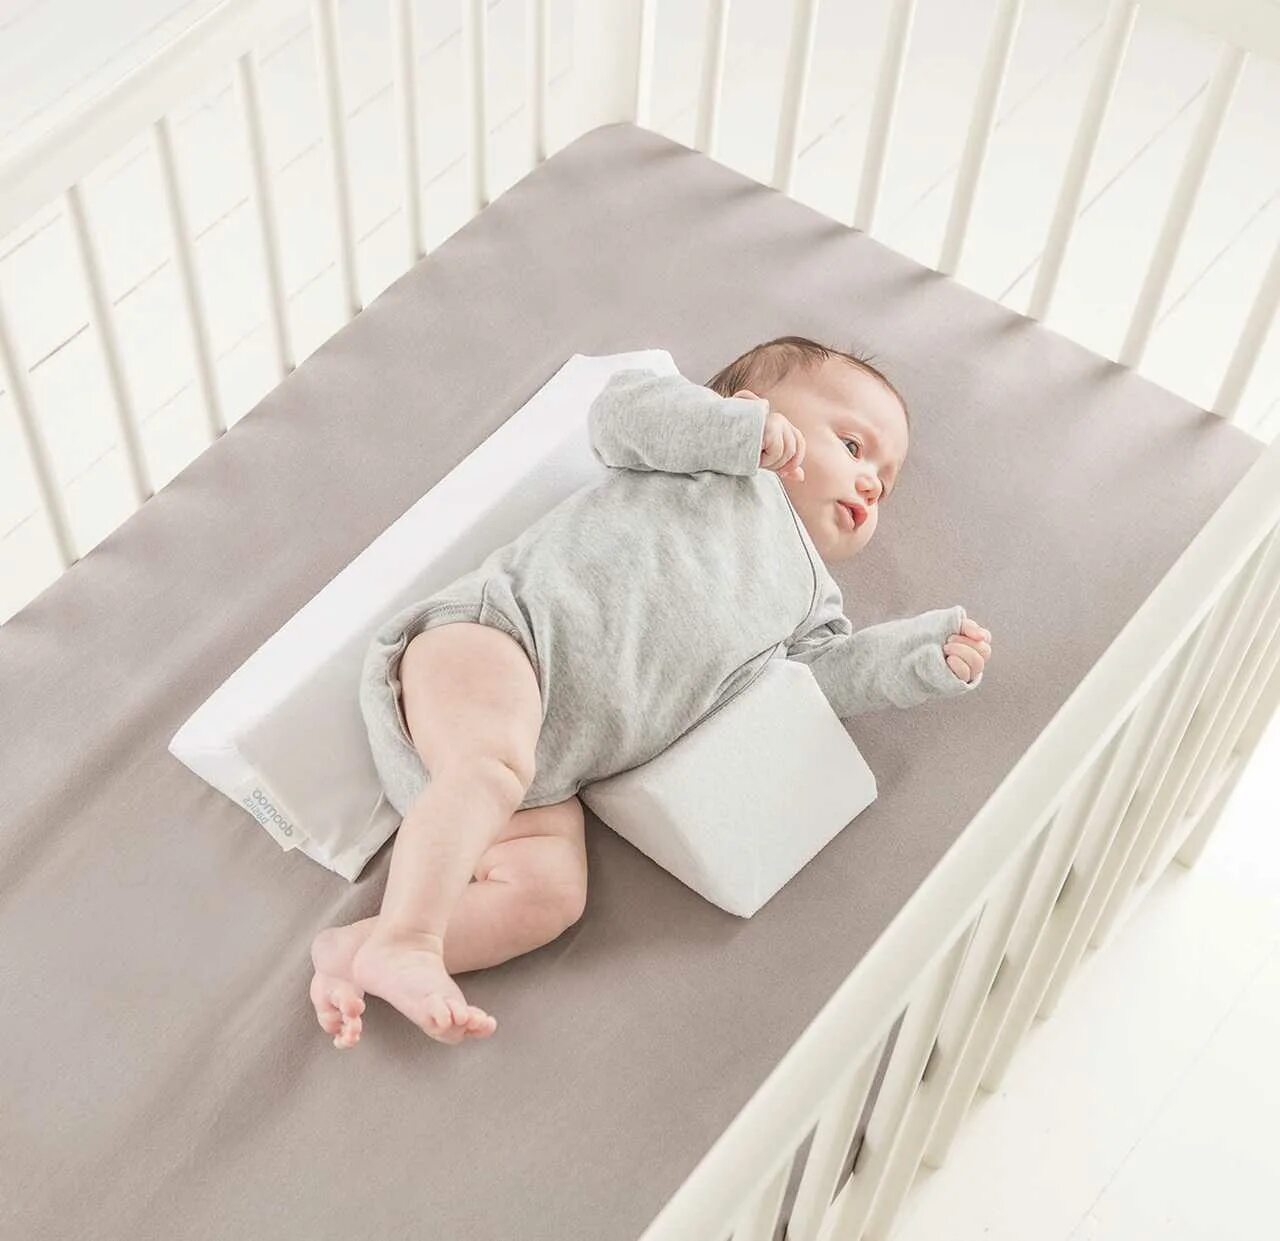 Sleep для новорожденных. Позы для сна новорожденного. Правильная поза для сна новорожденного. Укладывание малыша в кроватку. Поза младенца во сне.